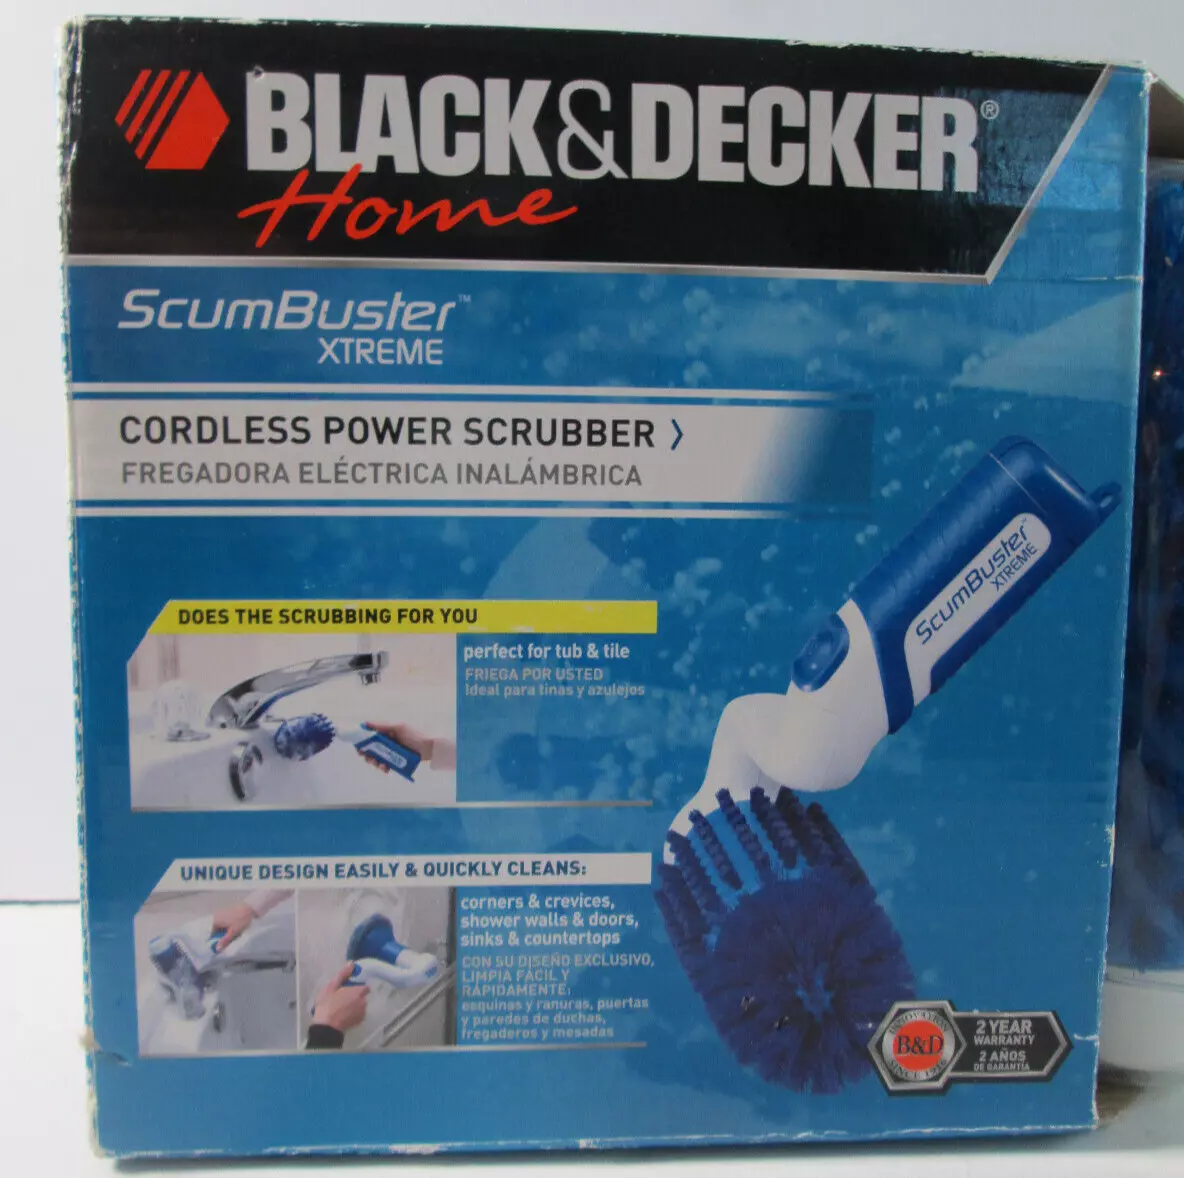 Black & Decker Home Scumbuster Xtreme Cordless Power Scrubber